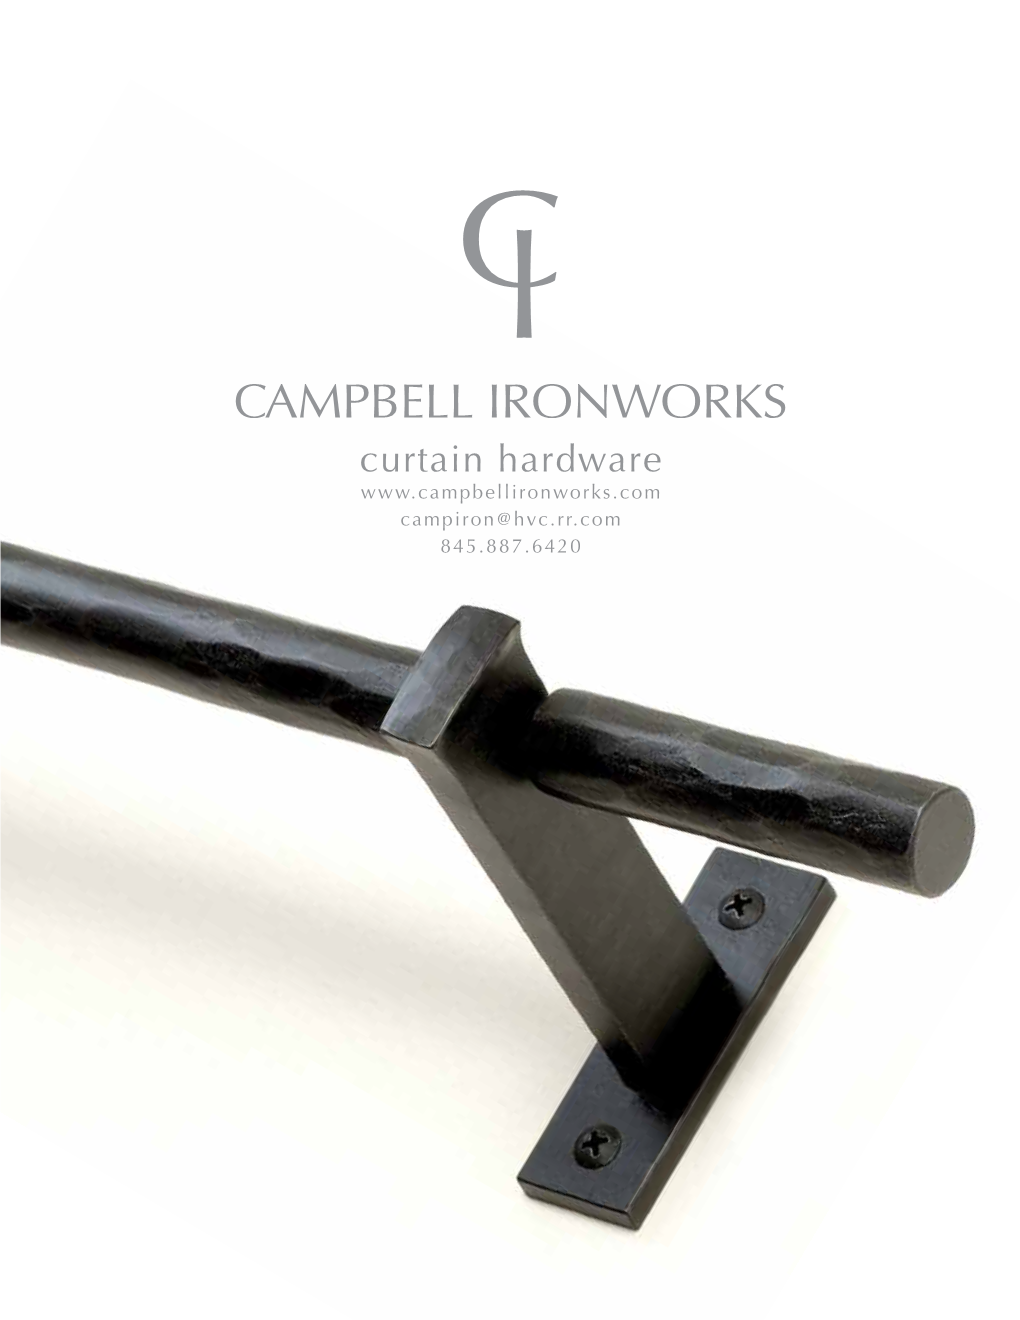 CAMPBELL IRONWORKS Curtain Hardware Campiron@Hvc.Rr.Com 845.887.6420 2 HARRISON HARDWARE